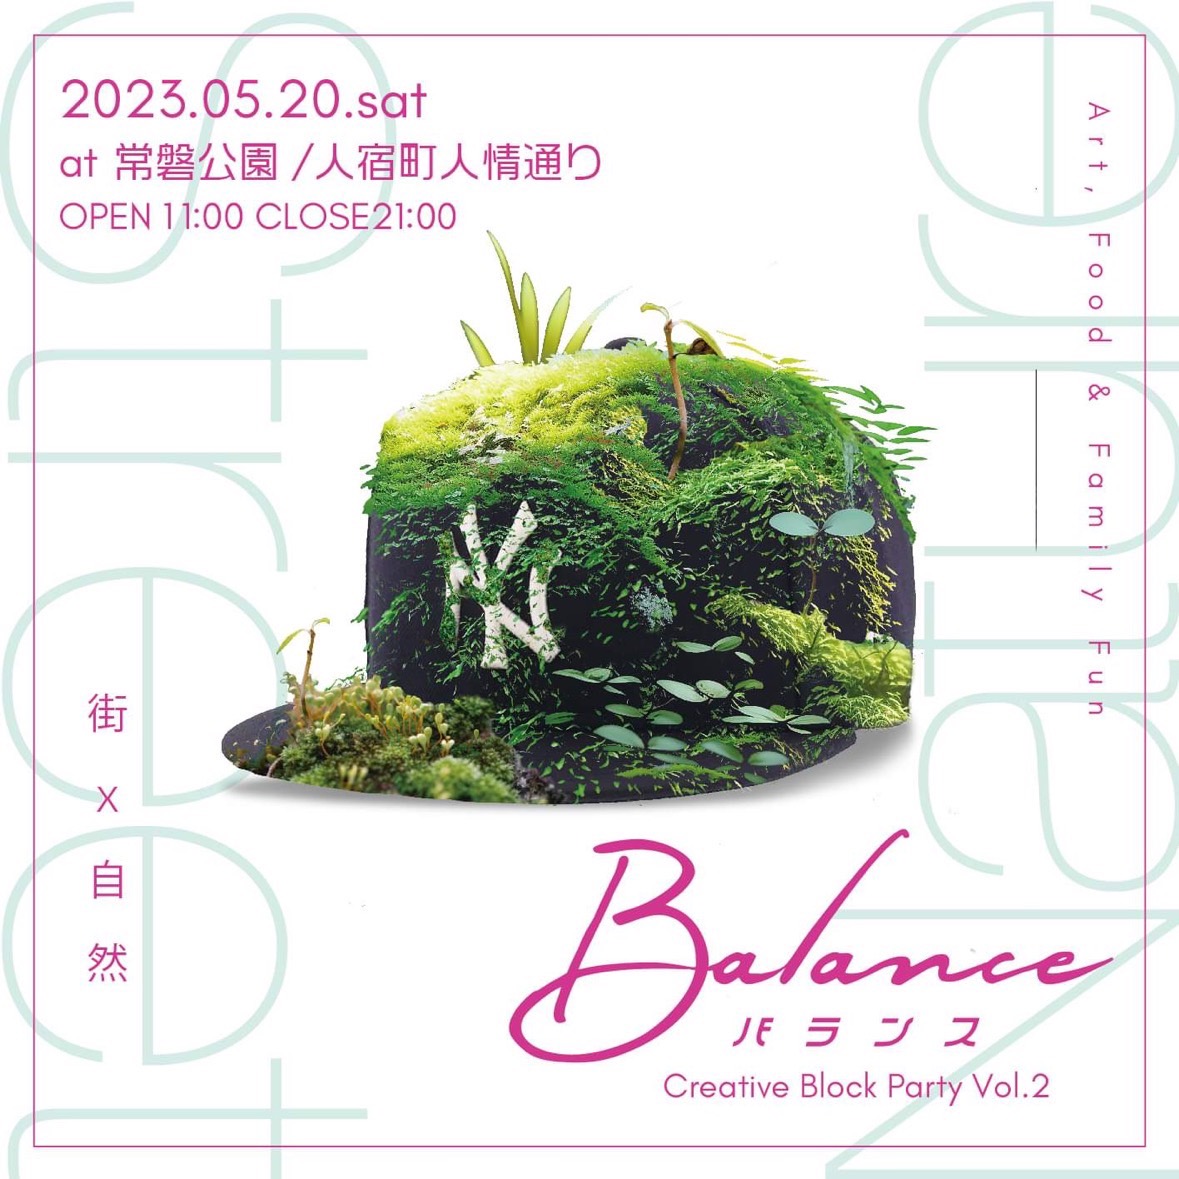 2023.5.20 sat 【 ~ Balance ~ Creative Block Party Vol.2】